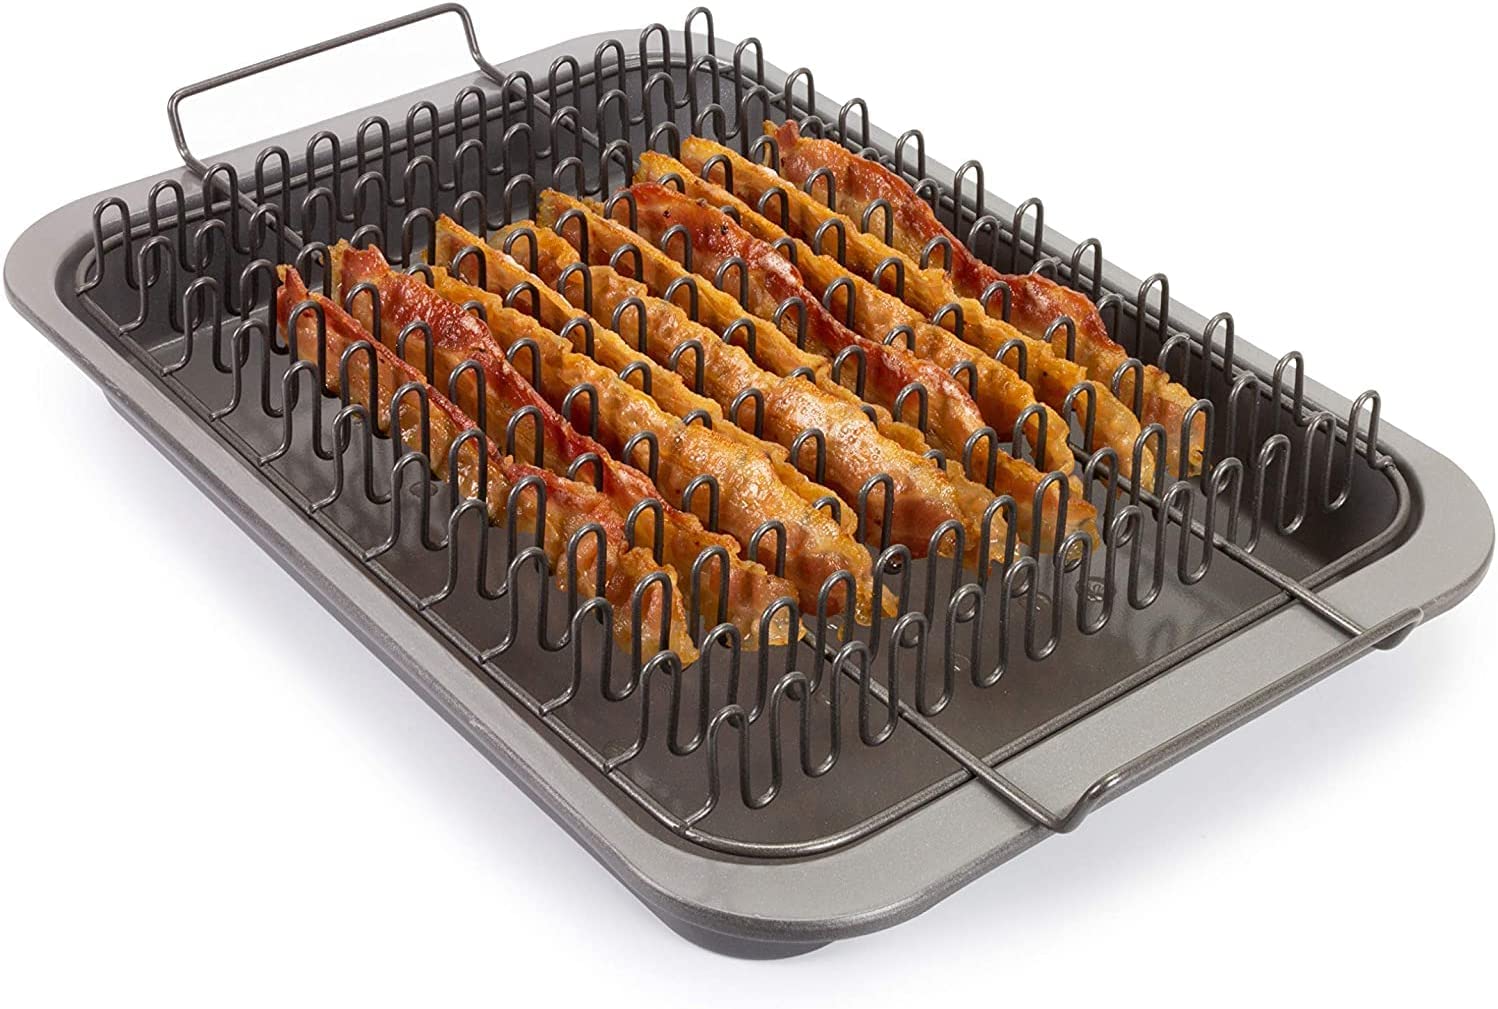 EaZy MealZ Bacon Rack & Tray Set